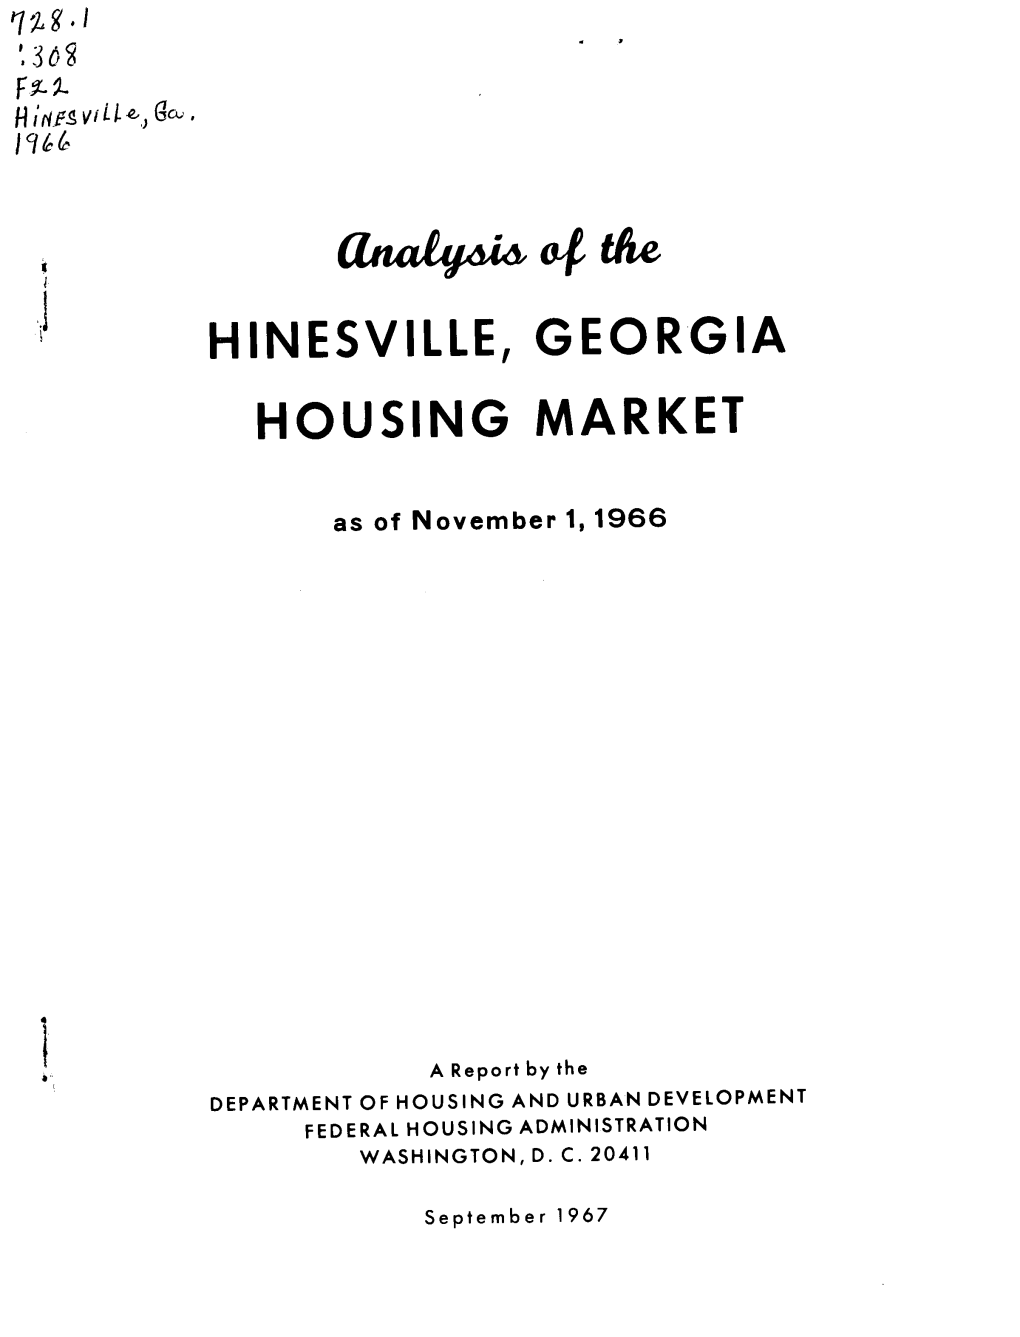 Analysis of the Hinesville, Georgia Housing Market